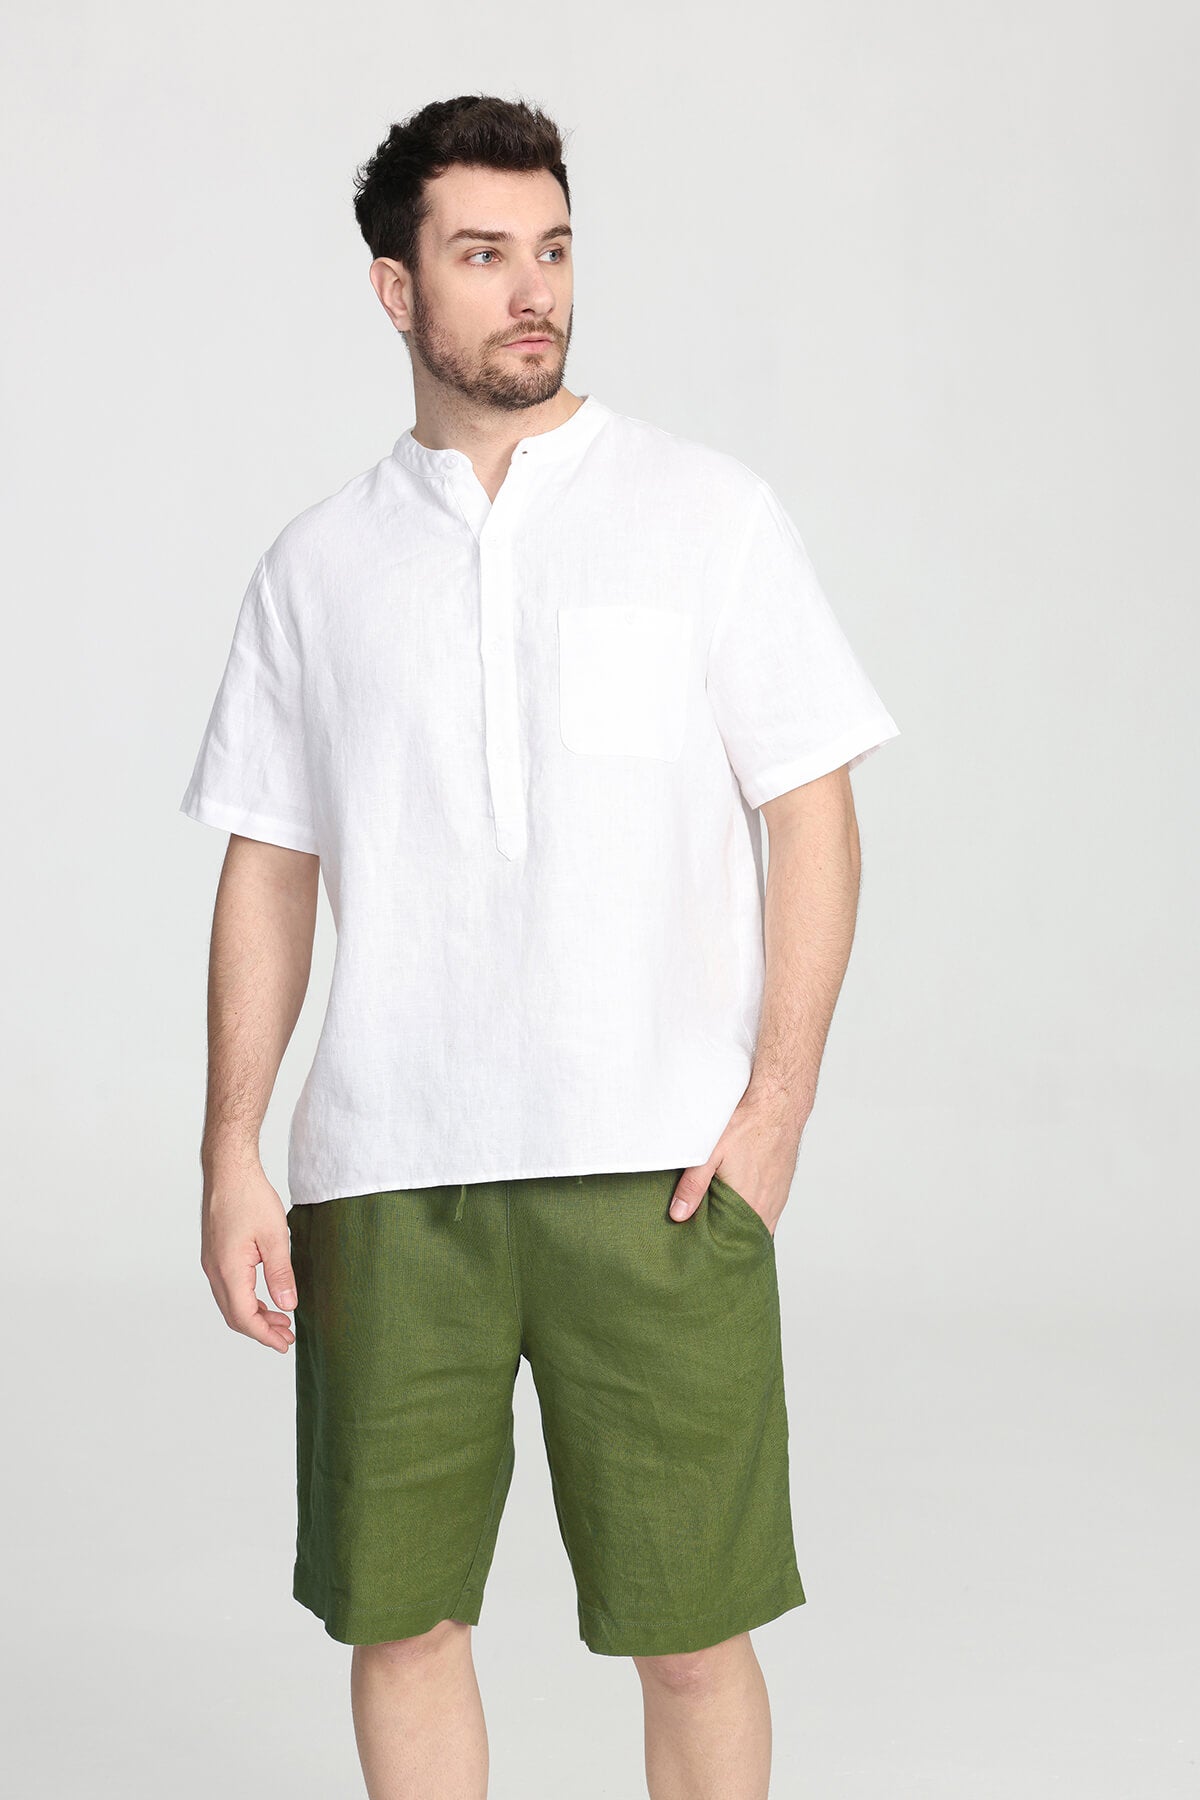 Ecoer- Men's Eco Organic Linen White Shirt 100% Organic Linen